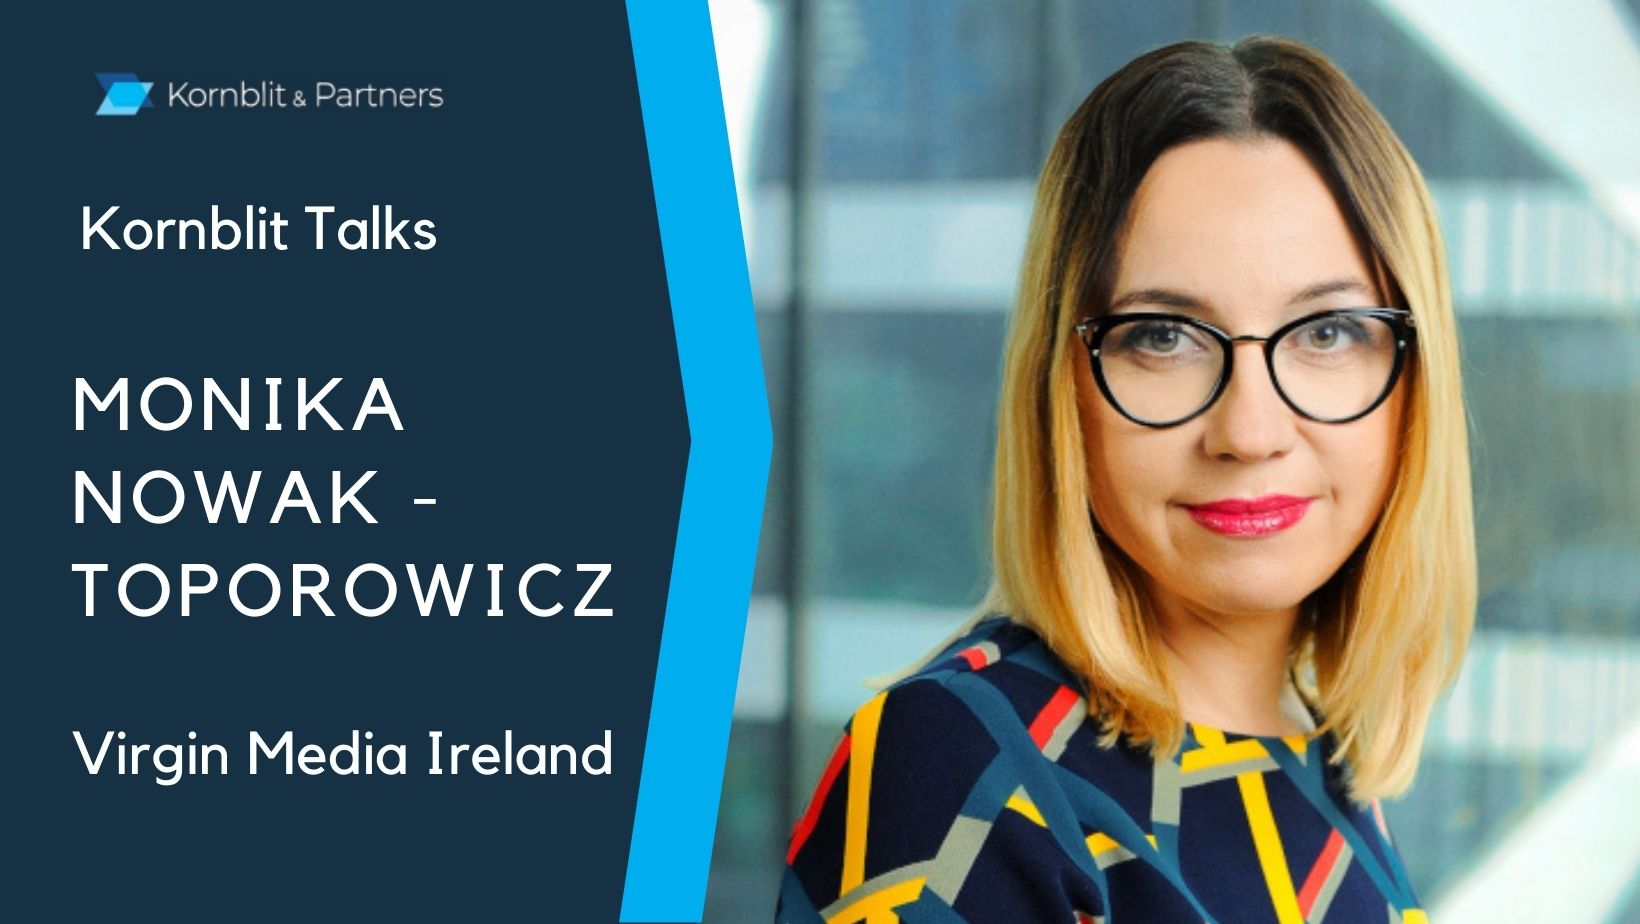 Monika Nowak - Toporowicz CTIO Virgin Media Ireland wywiad Kornblit Talks